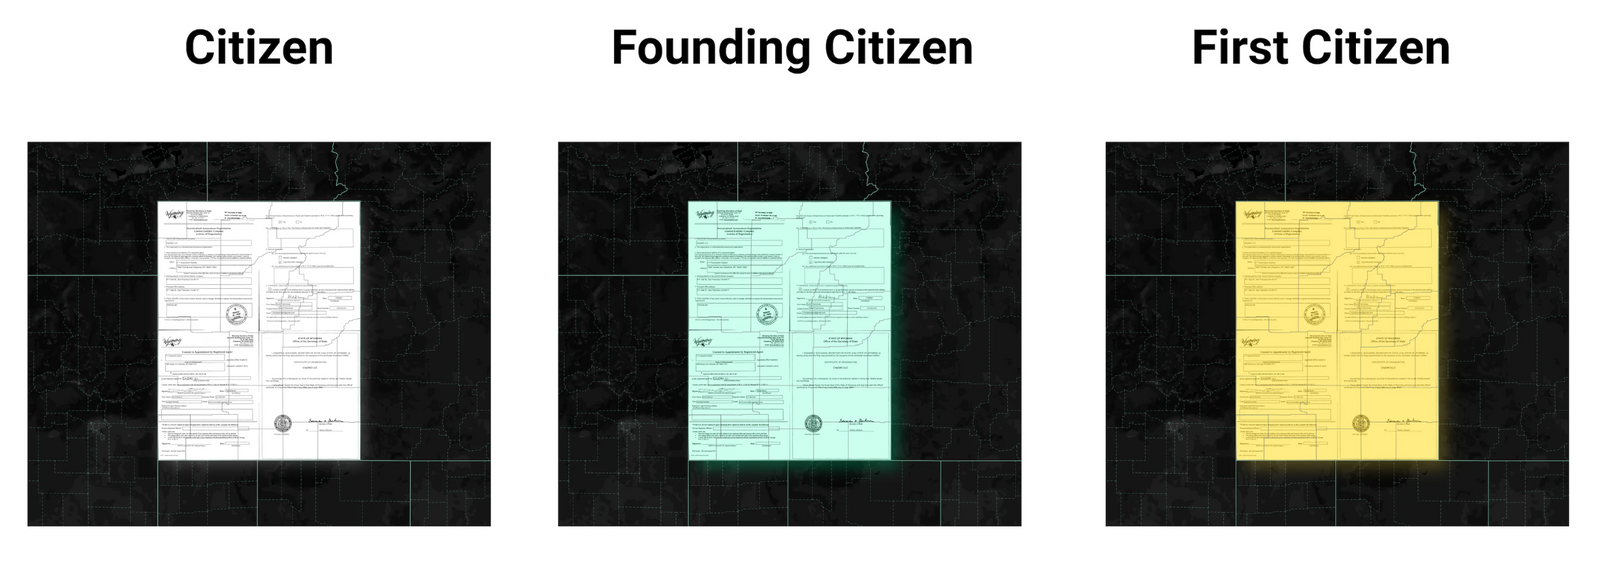 A sneak peak at CityDAO’s citizenship certificates.Credit: CityDAO